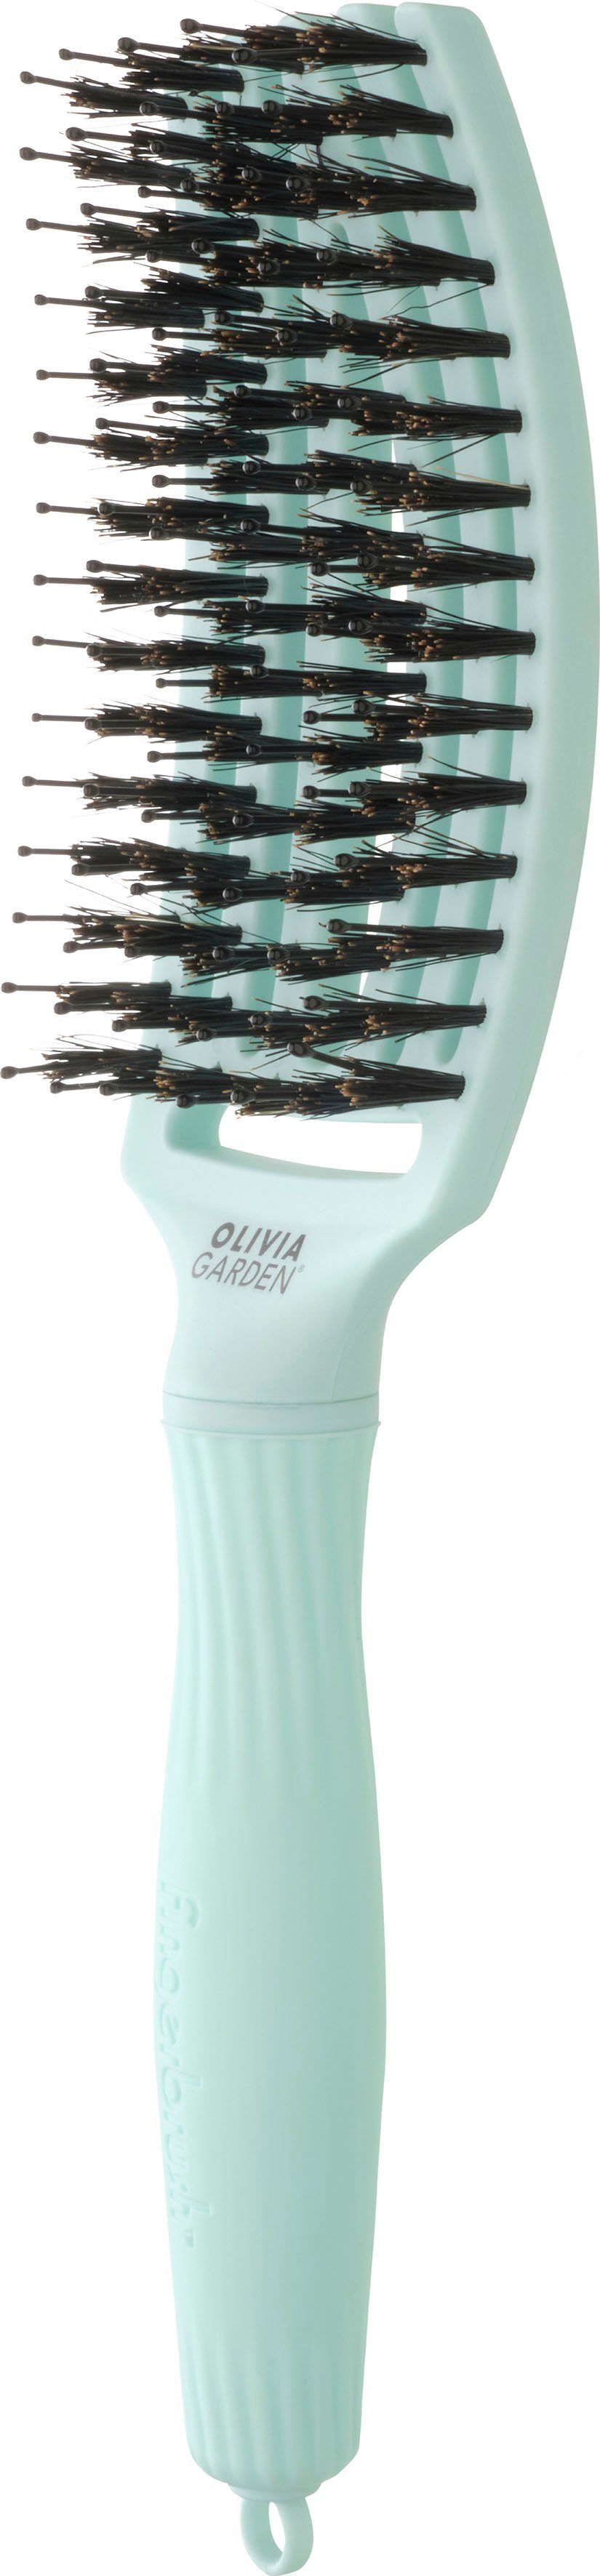 Medium Fingerbrush Combo Haarbürste OLIVIA mint GARDEN